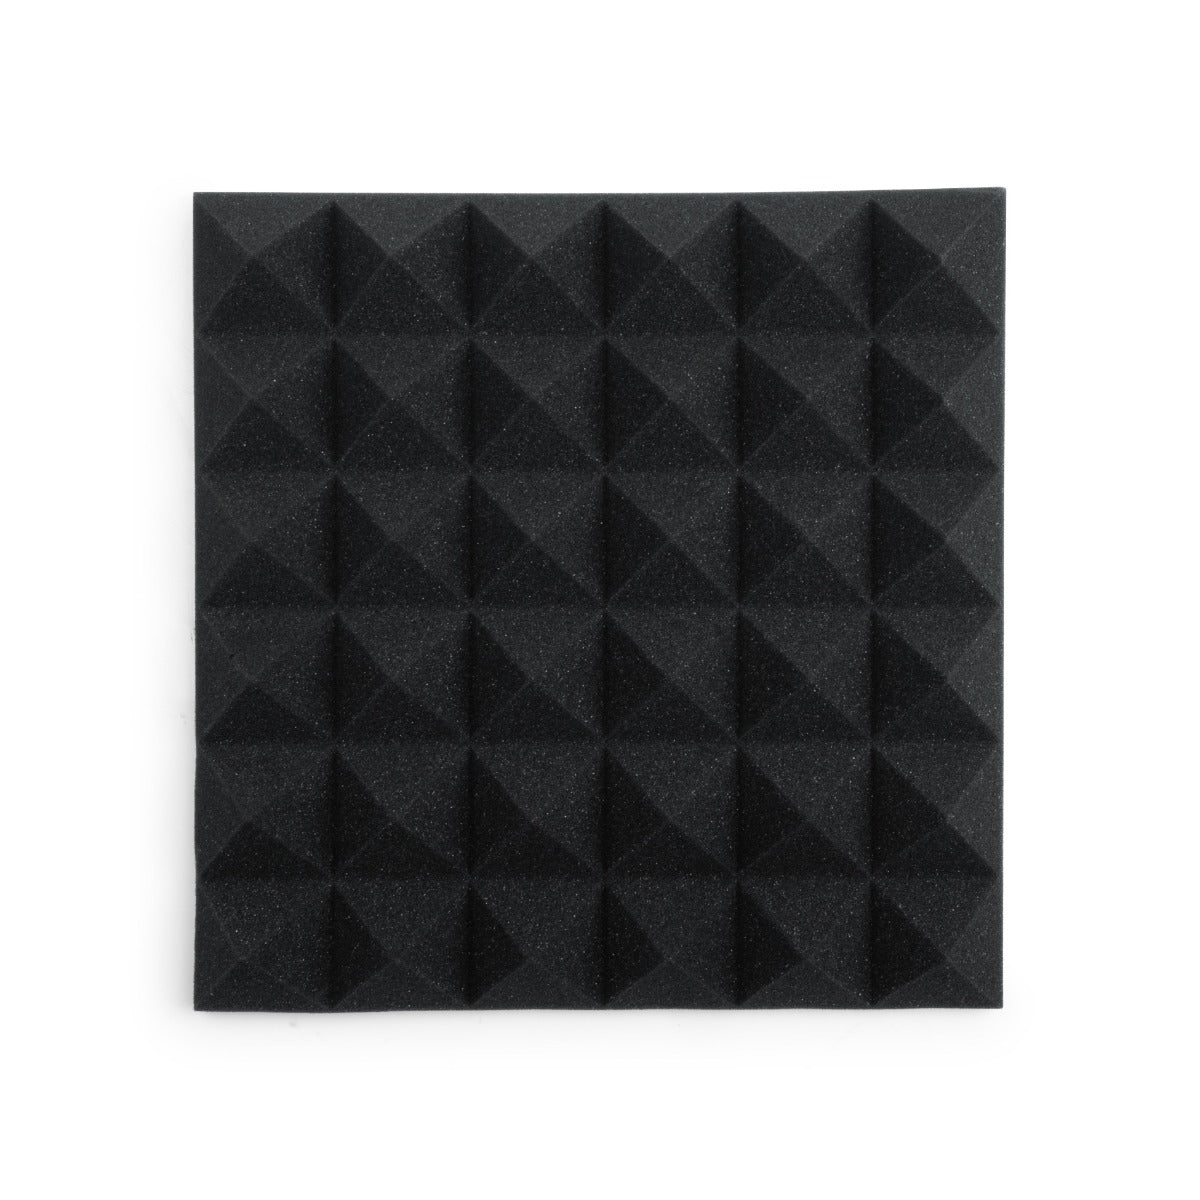 Image of a single acoustic foam panel